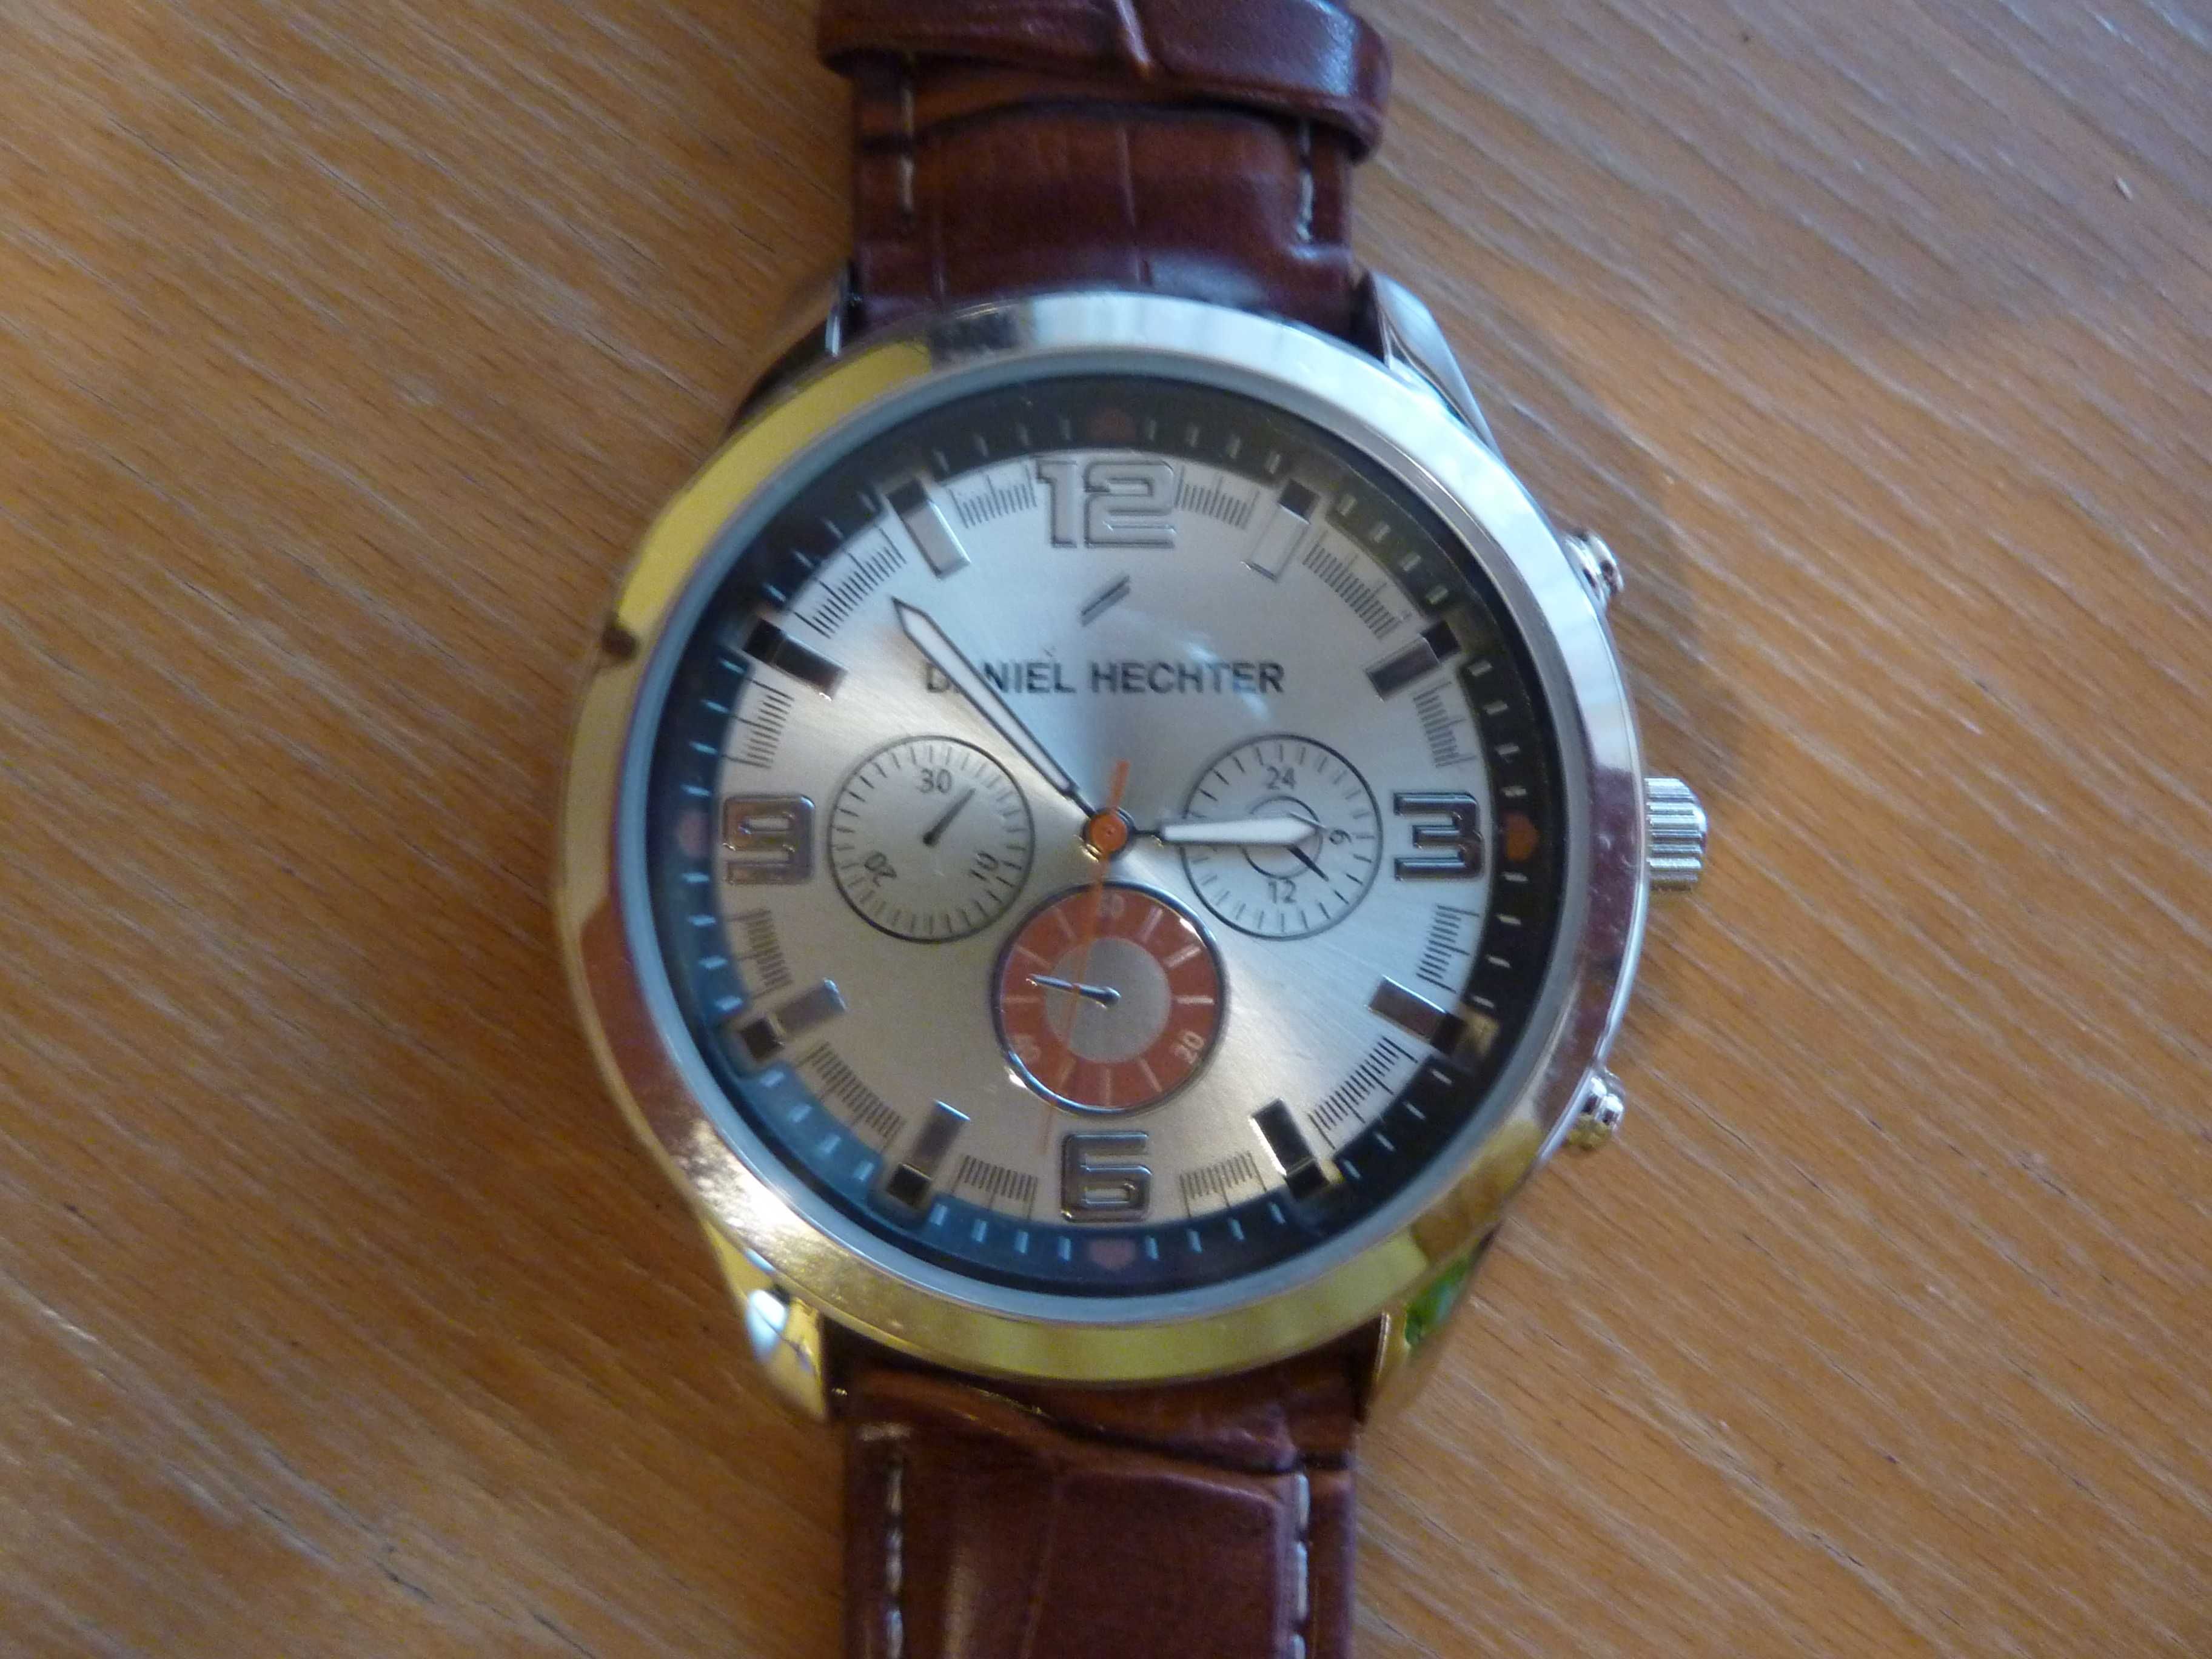 Oryginalny, elegancki zegarek Daniel Hetcher